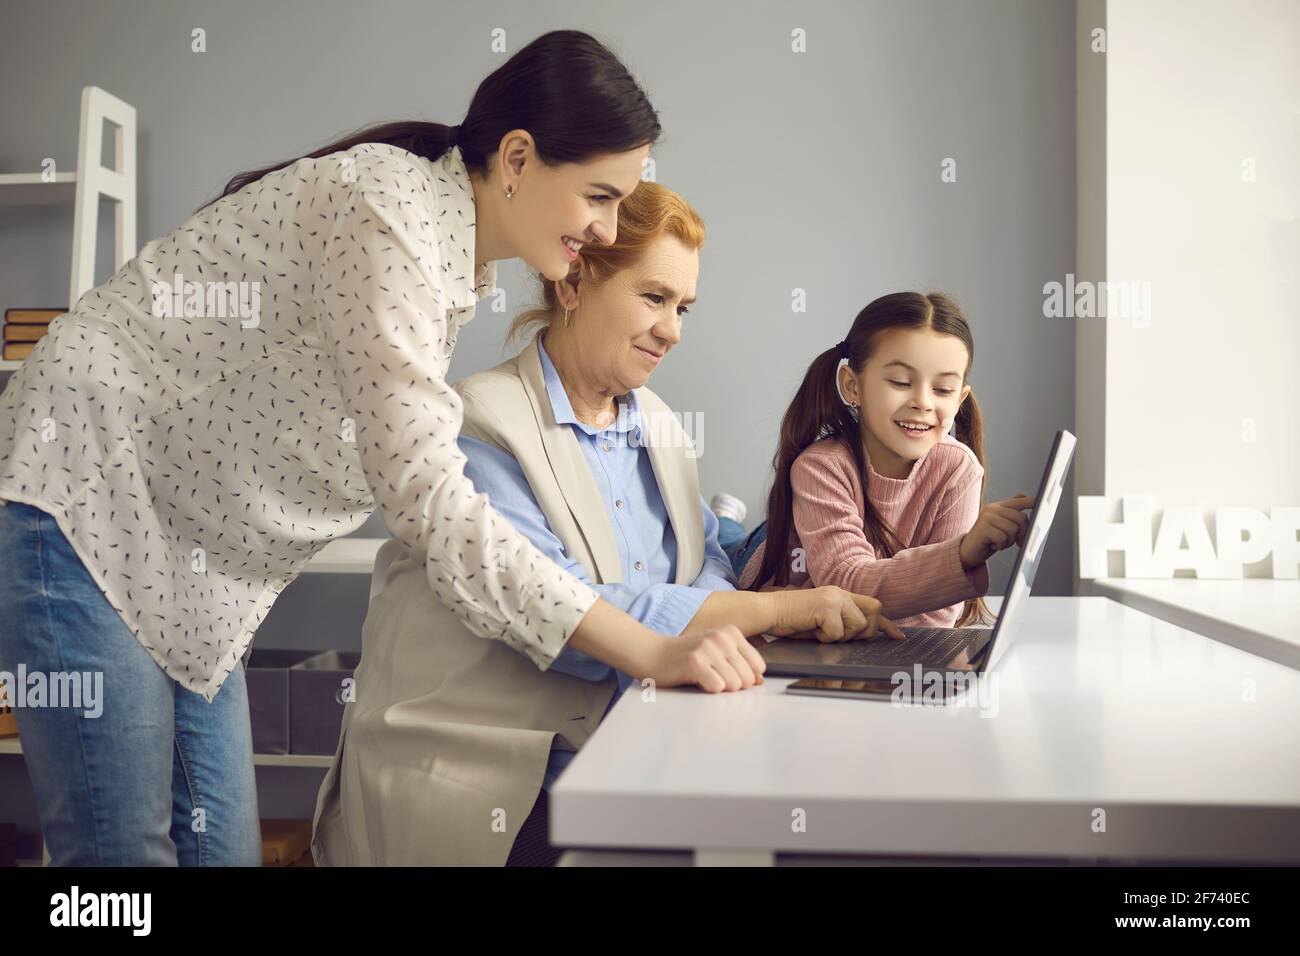 Adult daughter grandchild teaching elderly grandmother to use internet on laptop Stock Photo